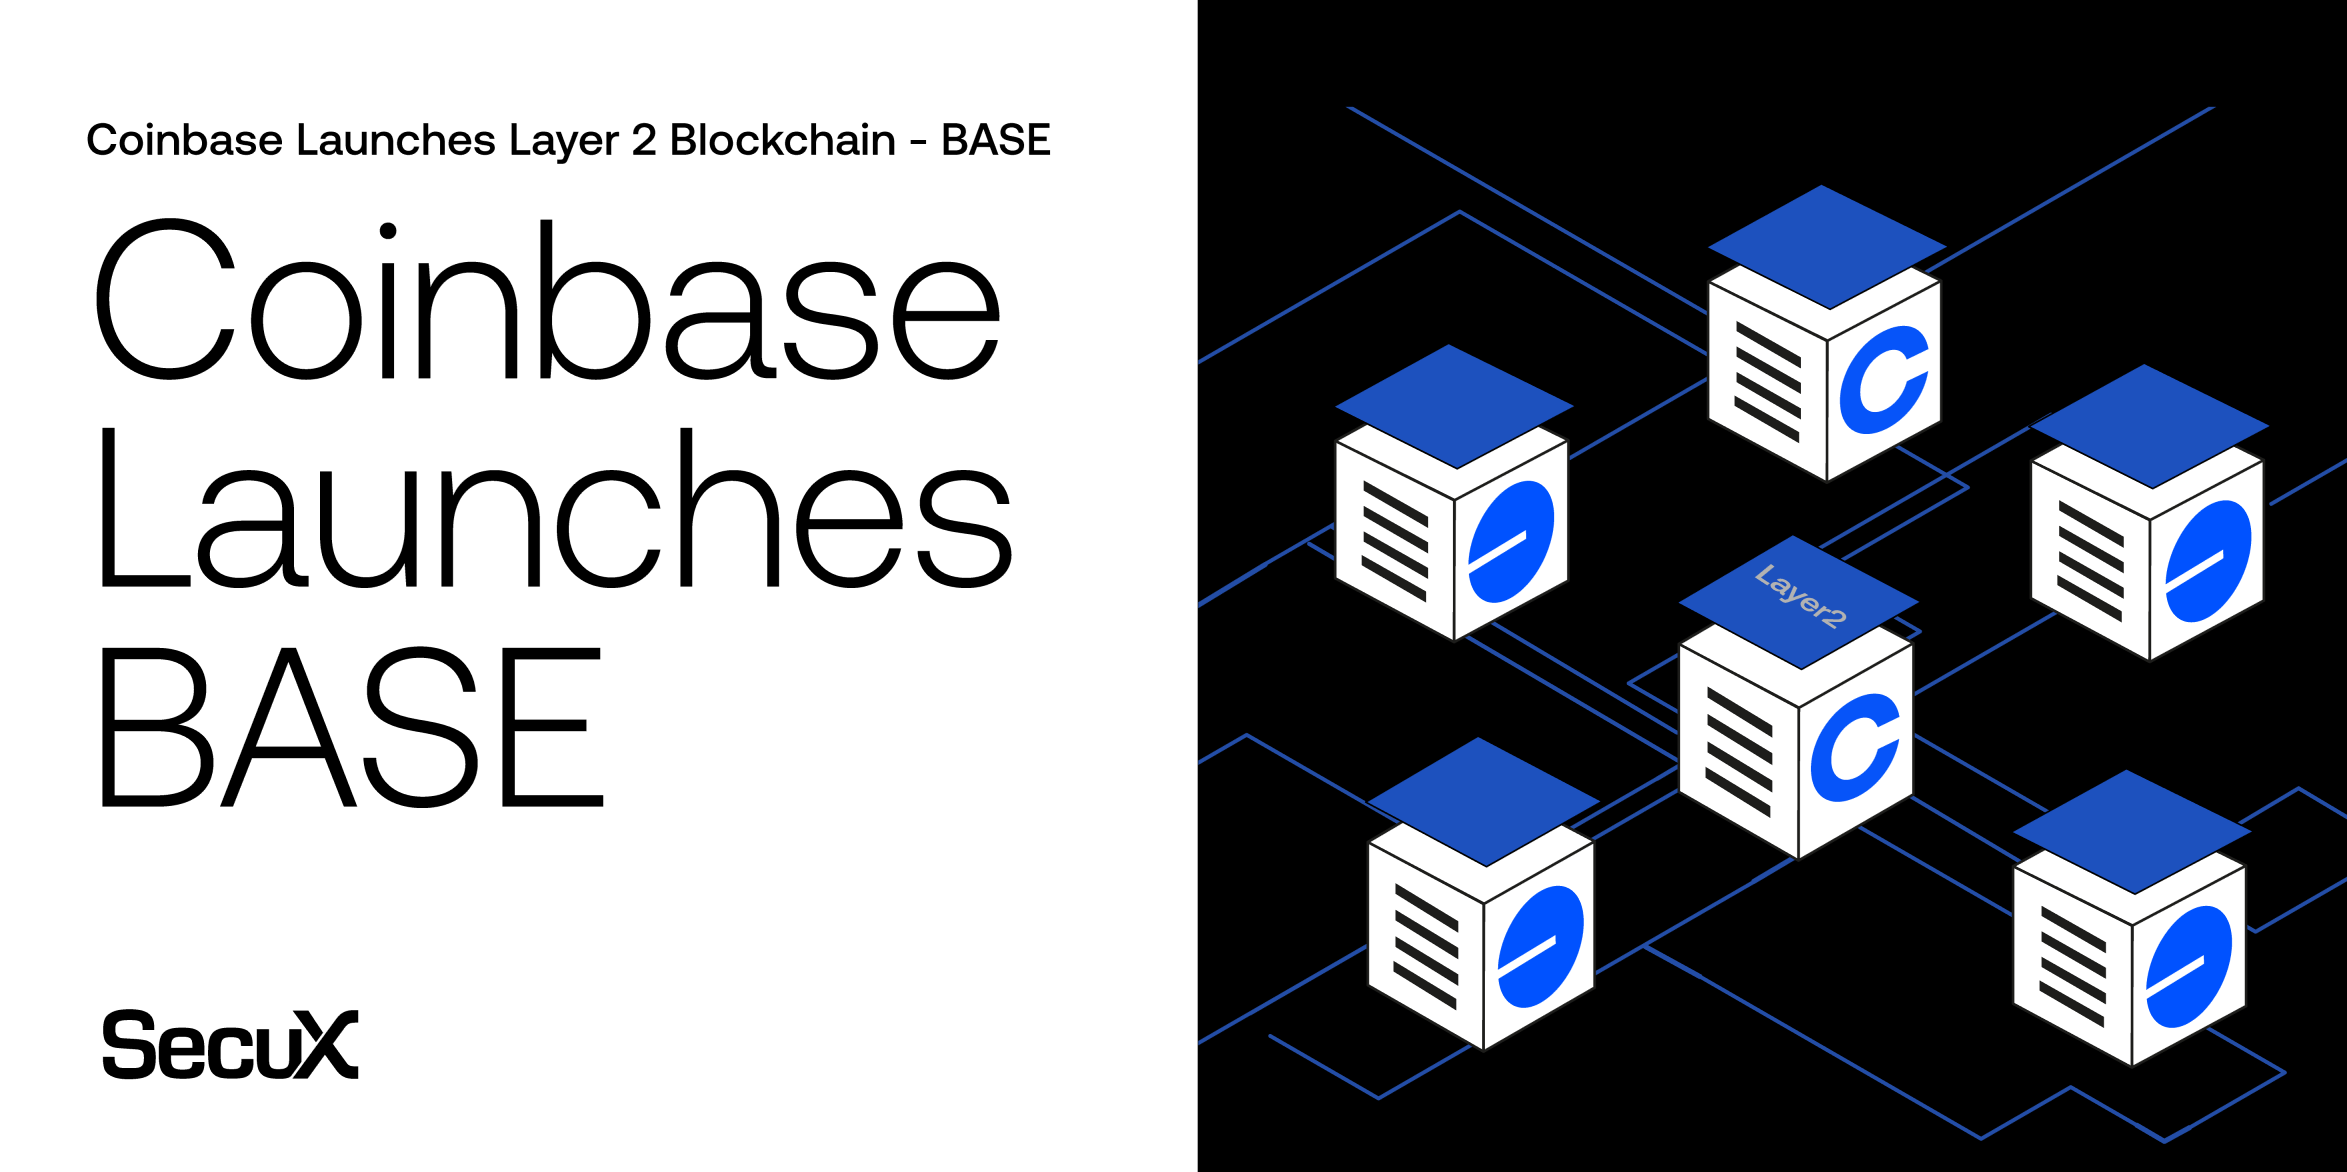 Coinbase Launches Blockchain - Base